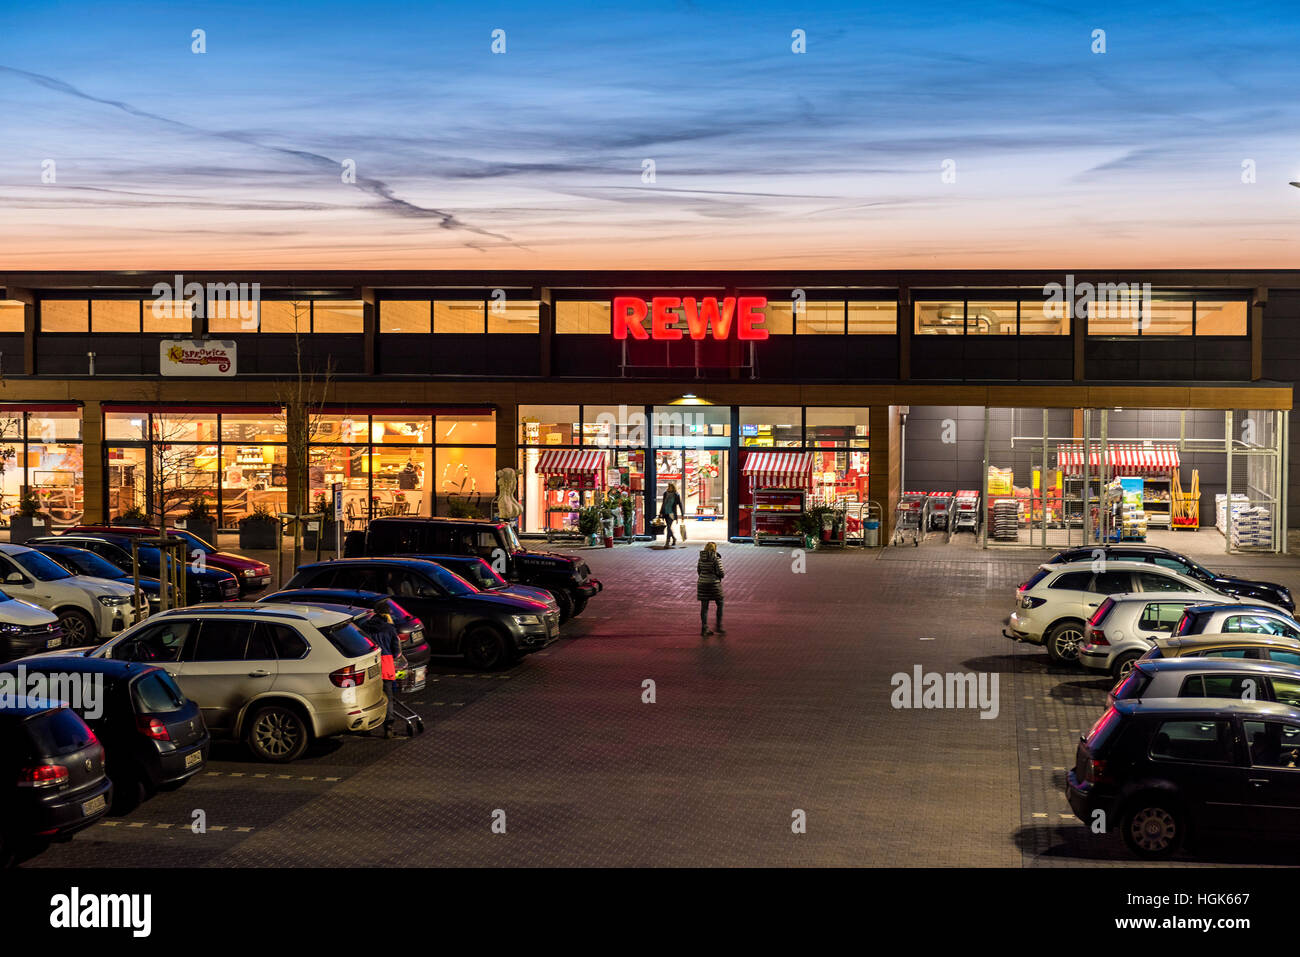 REWE Supermarket - South Germany Stock Photo